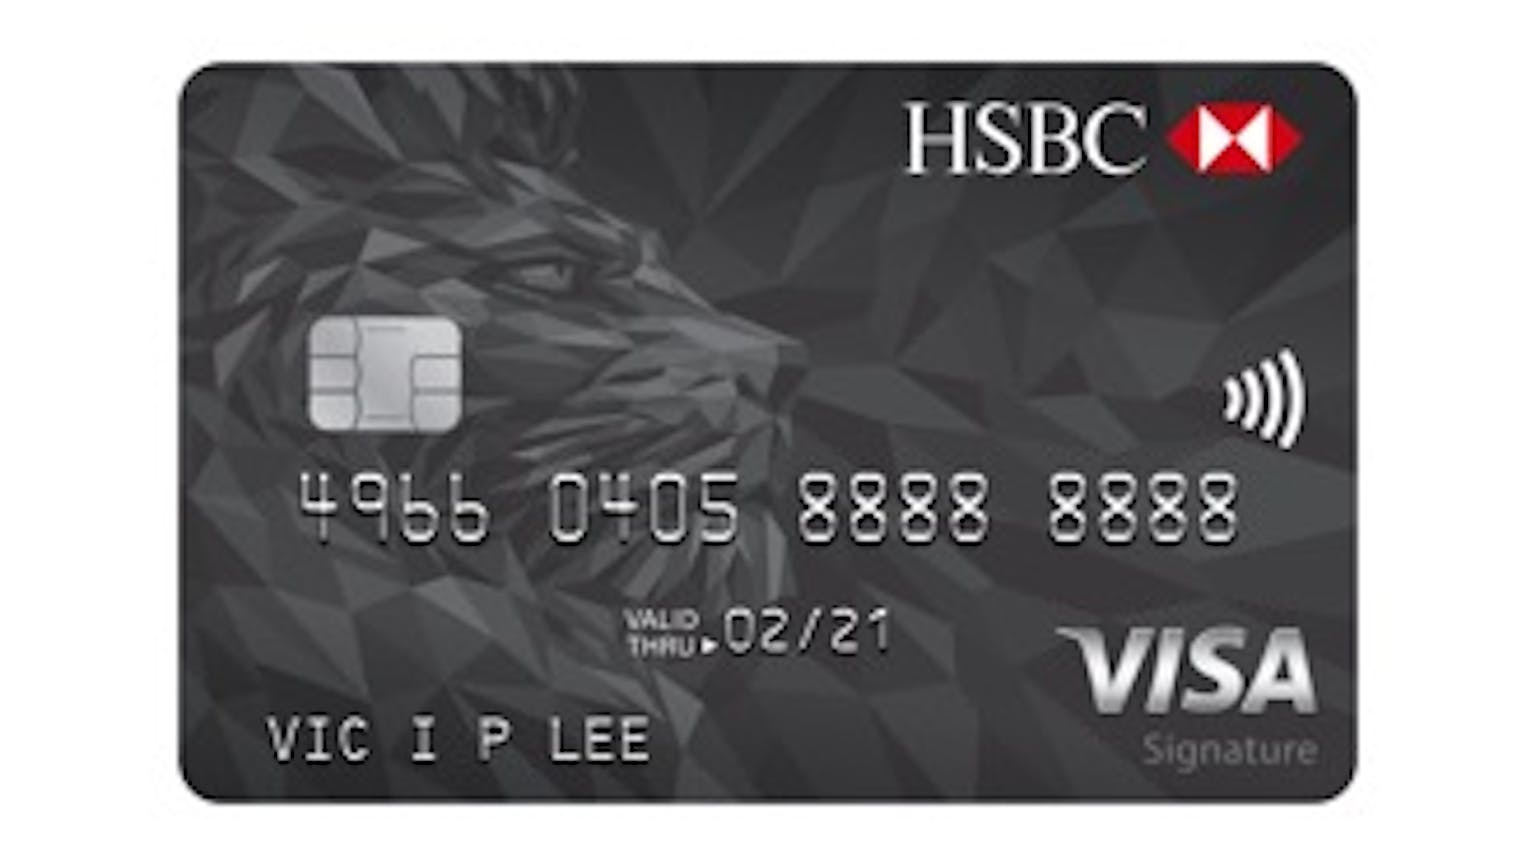 HSBC VISA Signature